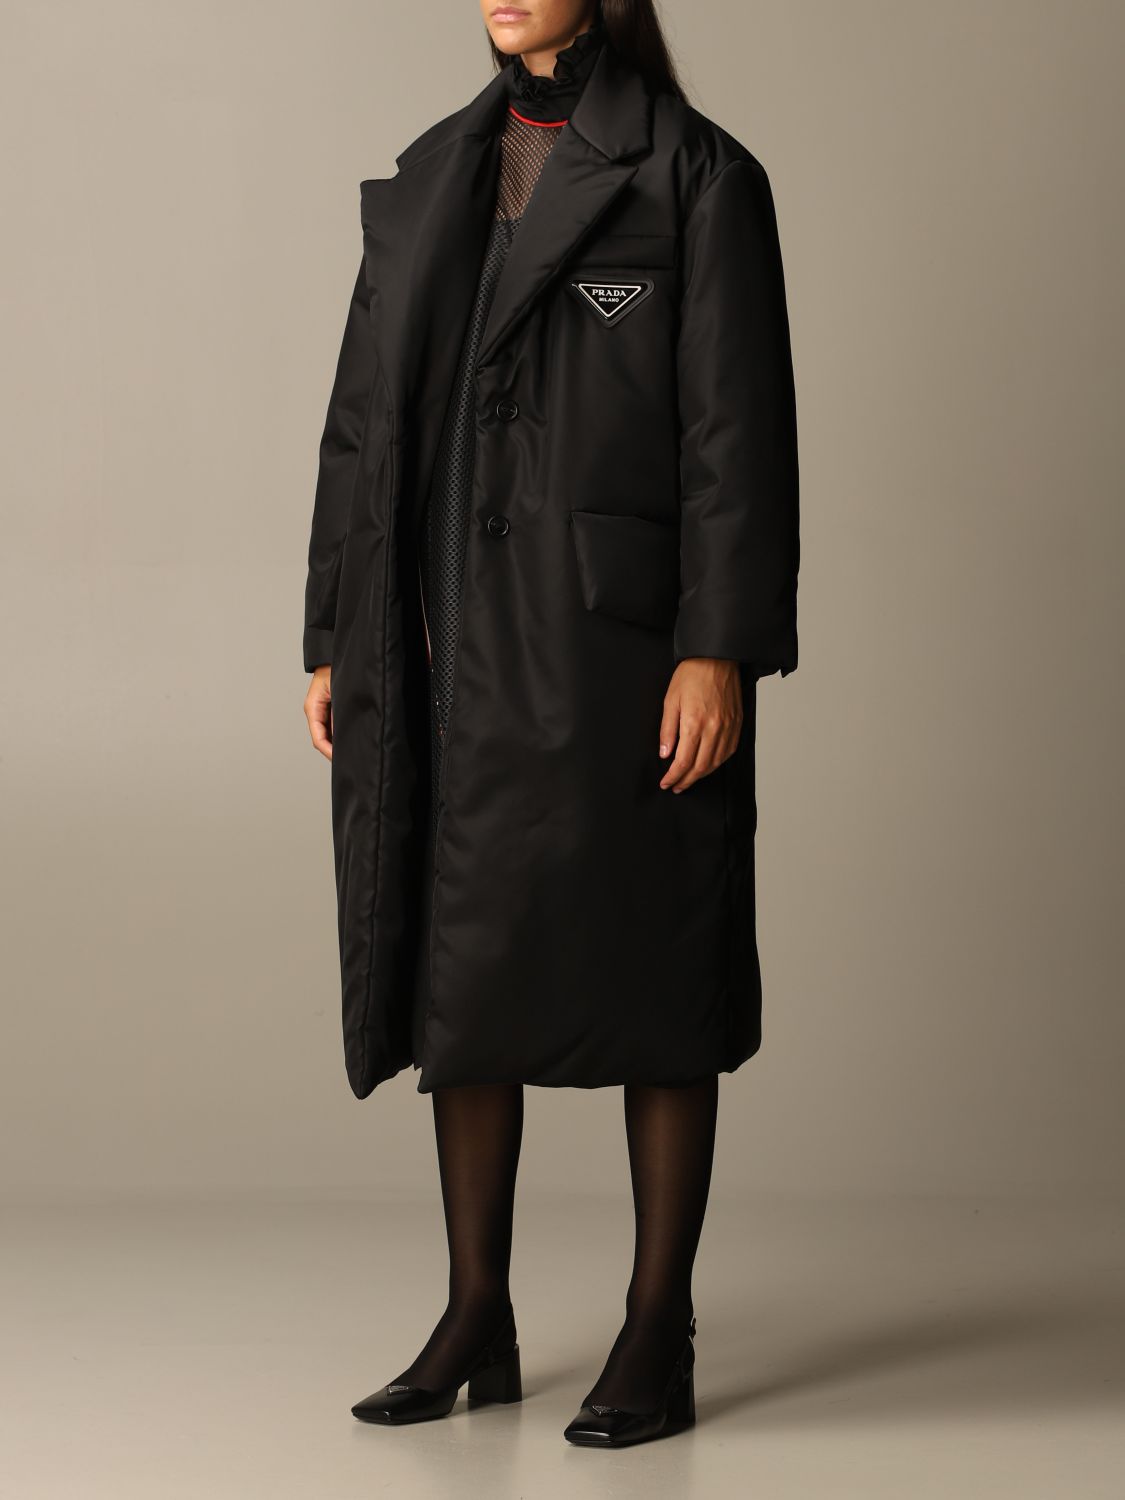 PRADA: long puffy down jacket with triangular logo - Black | Prada jacket  29C862 1WQ8 online on 